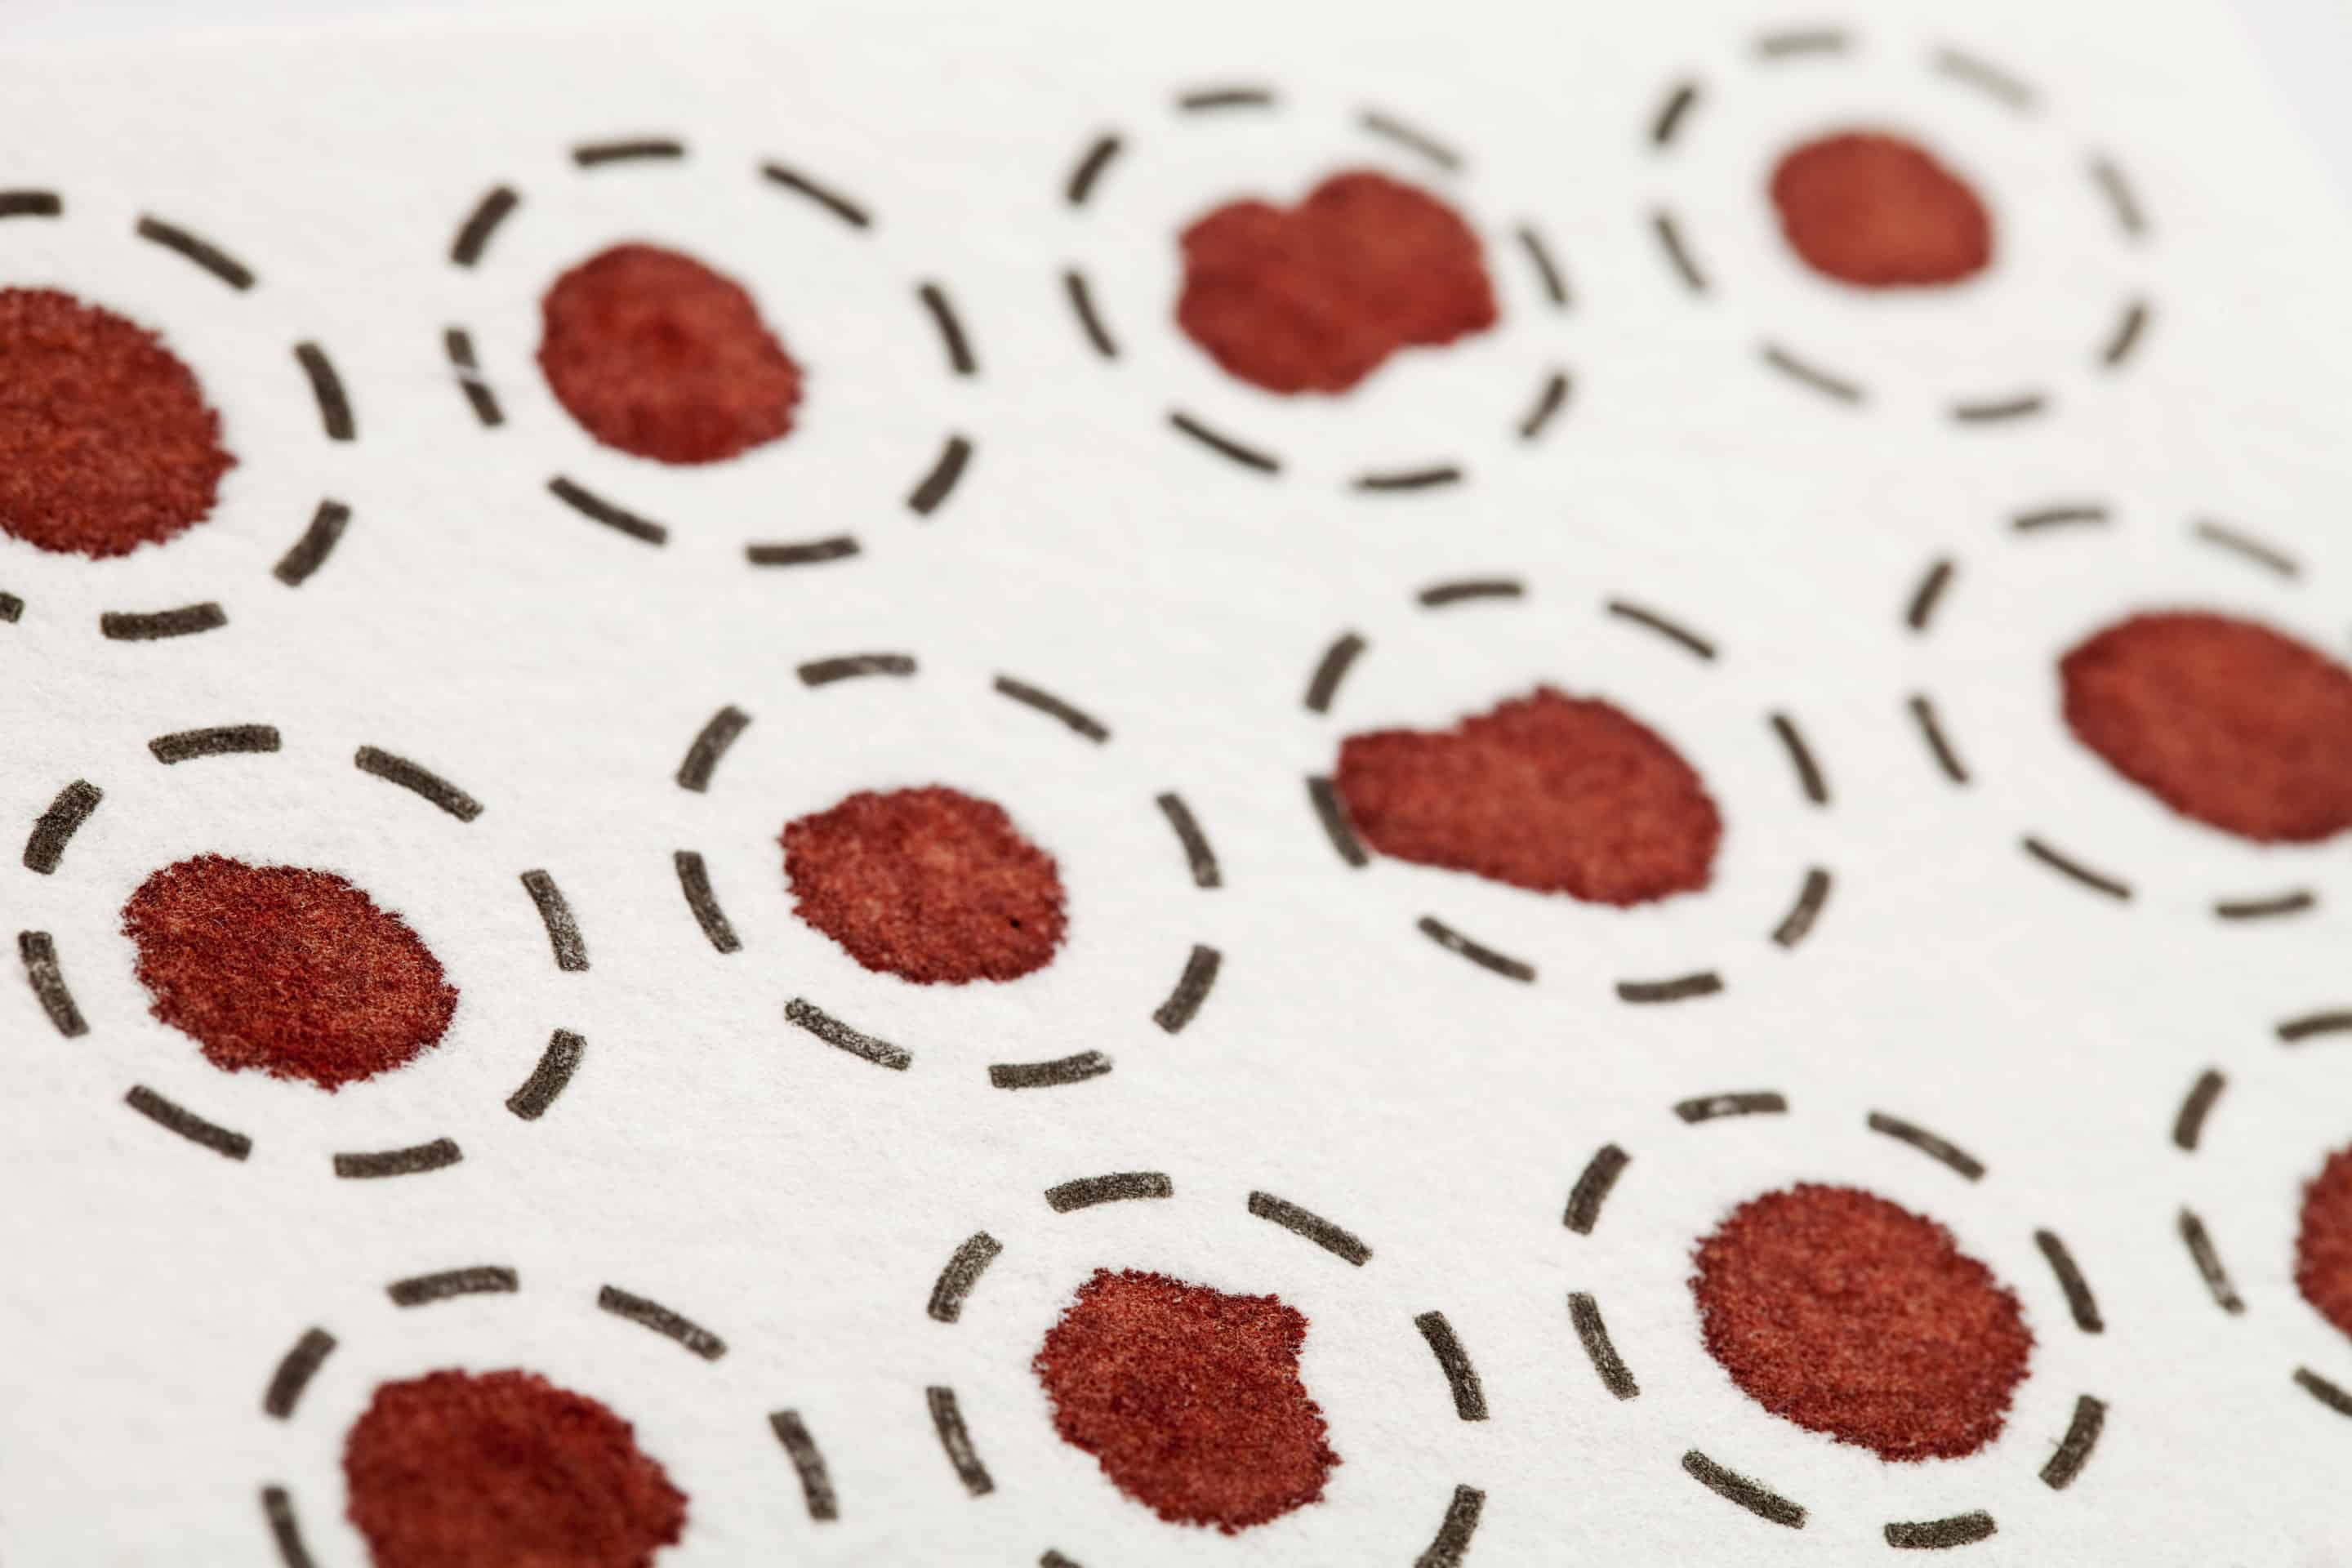 Dried Blood Spot (DBS) Card Analysis on Metabolon’s Metabolomics Platform